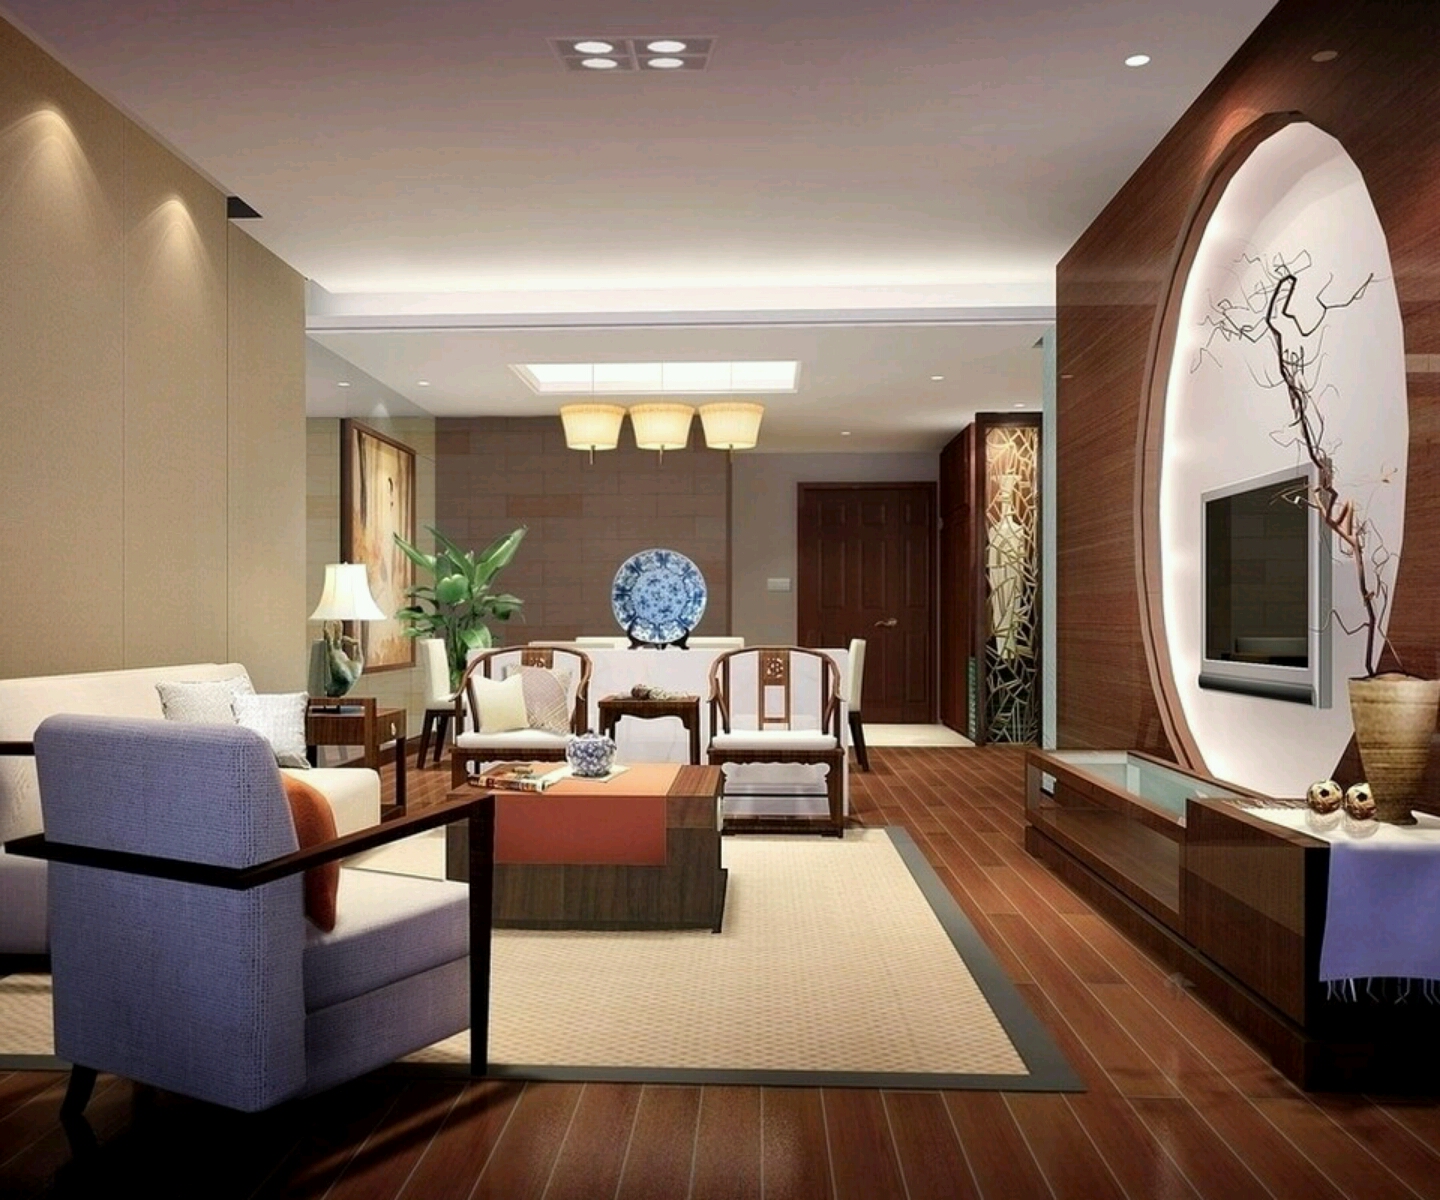 Luxury homes interior decoration living room designs ideas ...